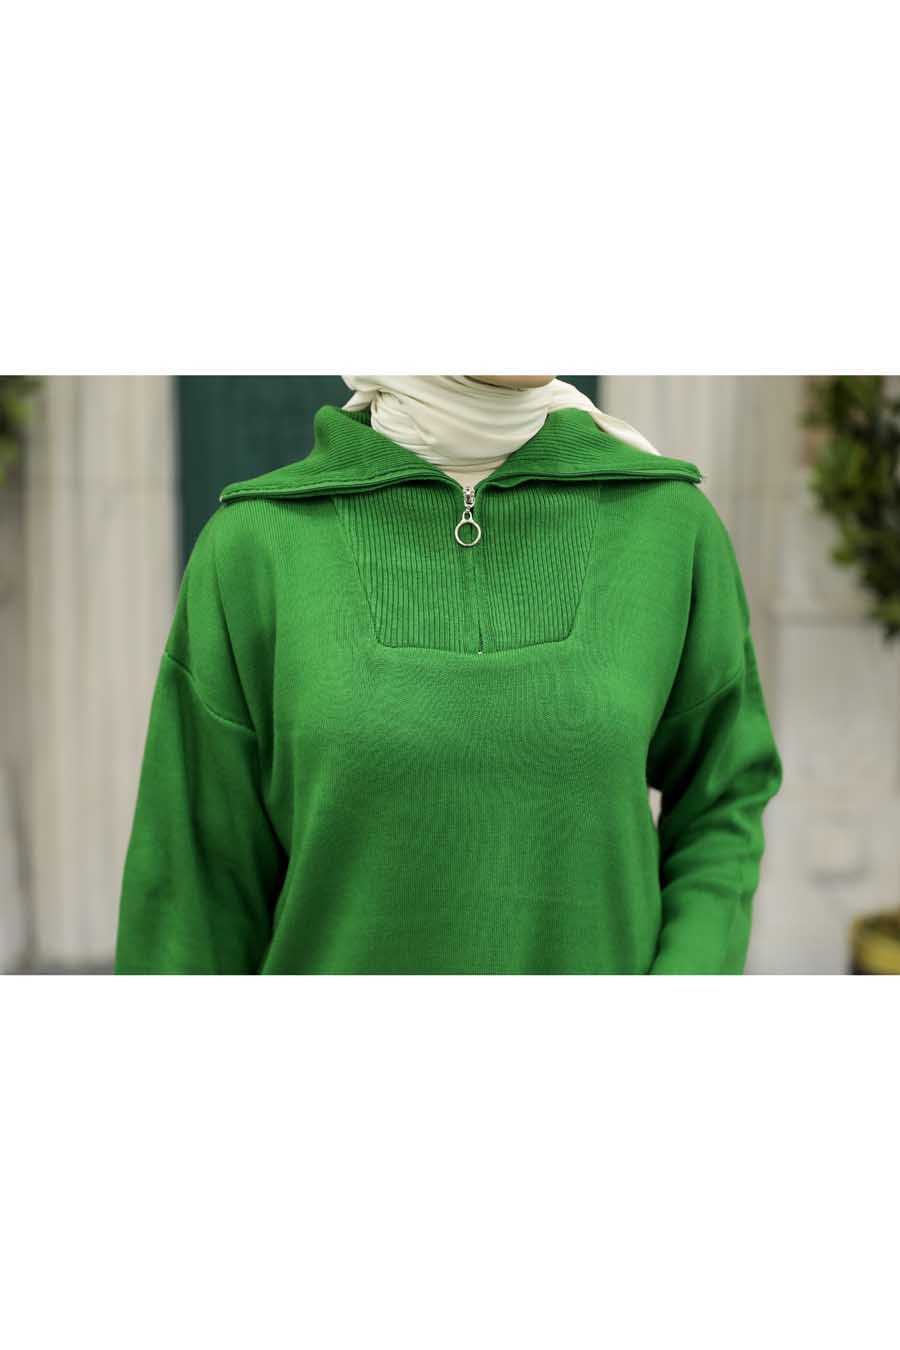 Neva Style - Green Hijab Knitwear Tunic 2690Y